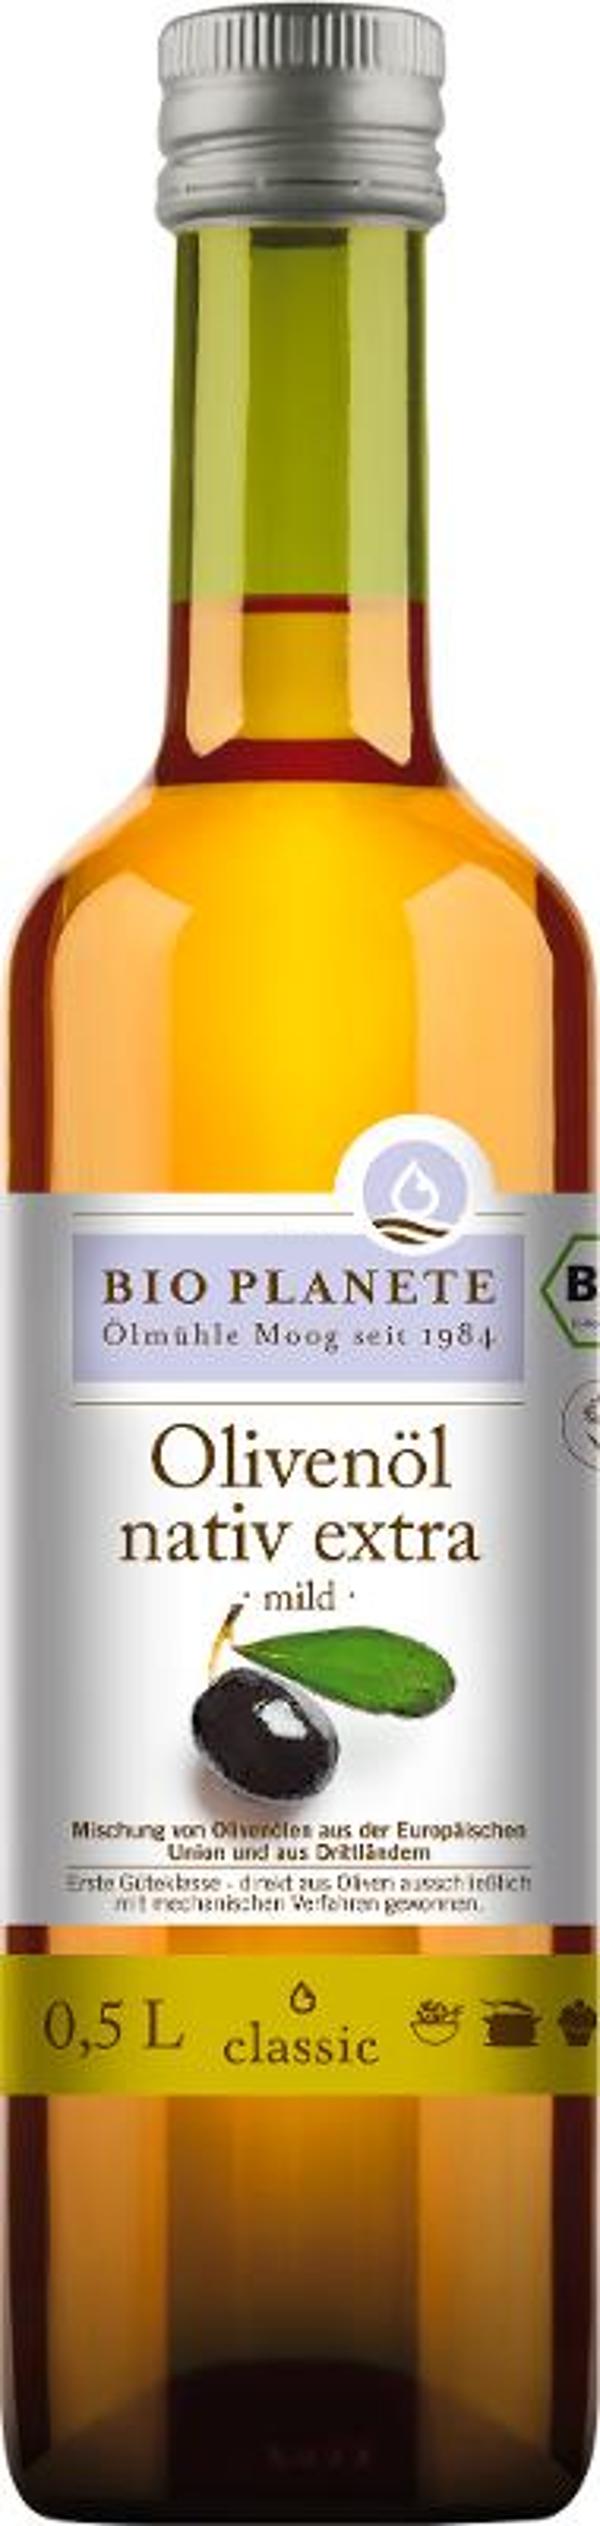 Produktfoto zu Olivenöl mild 0,5l